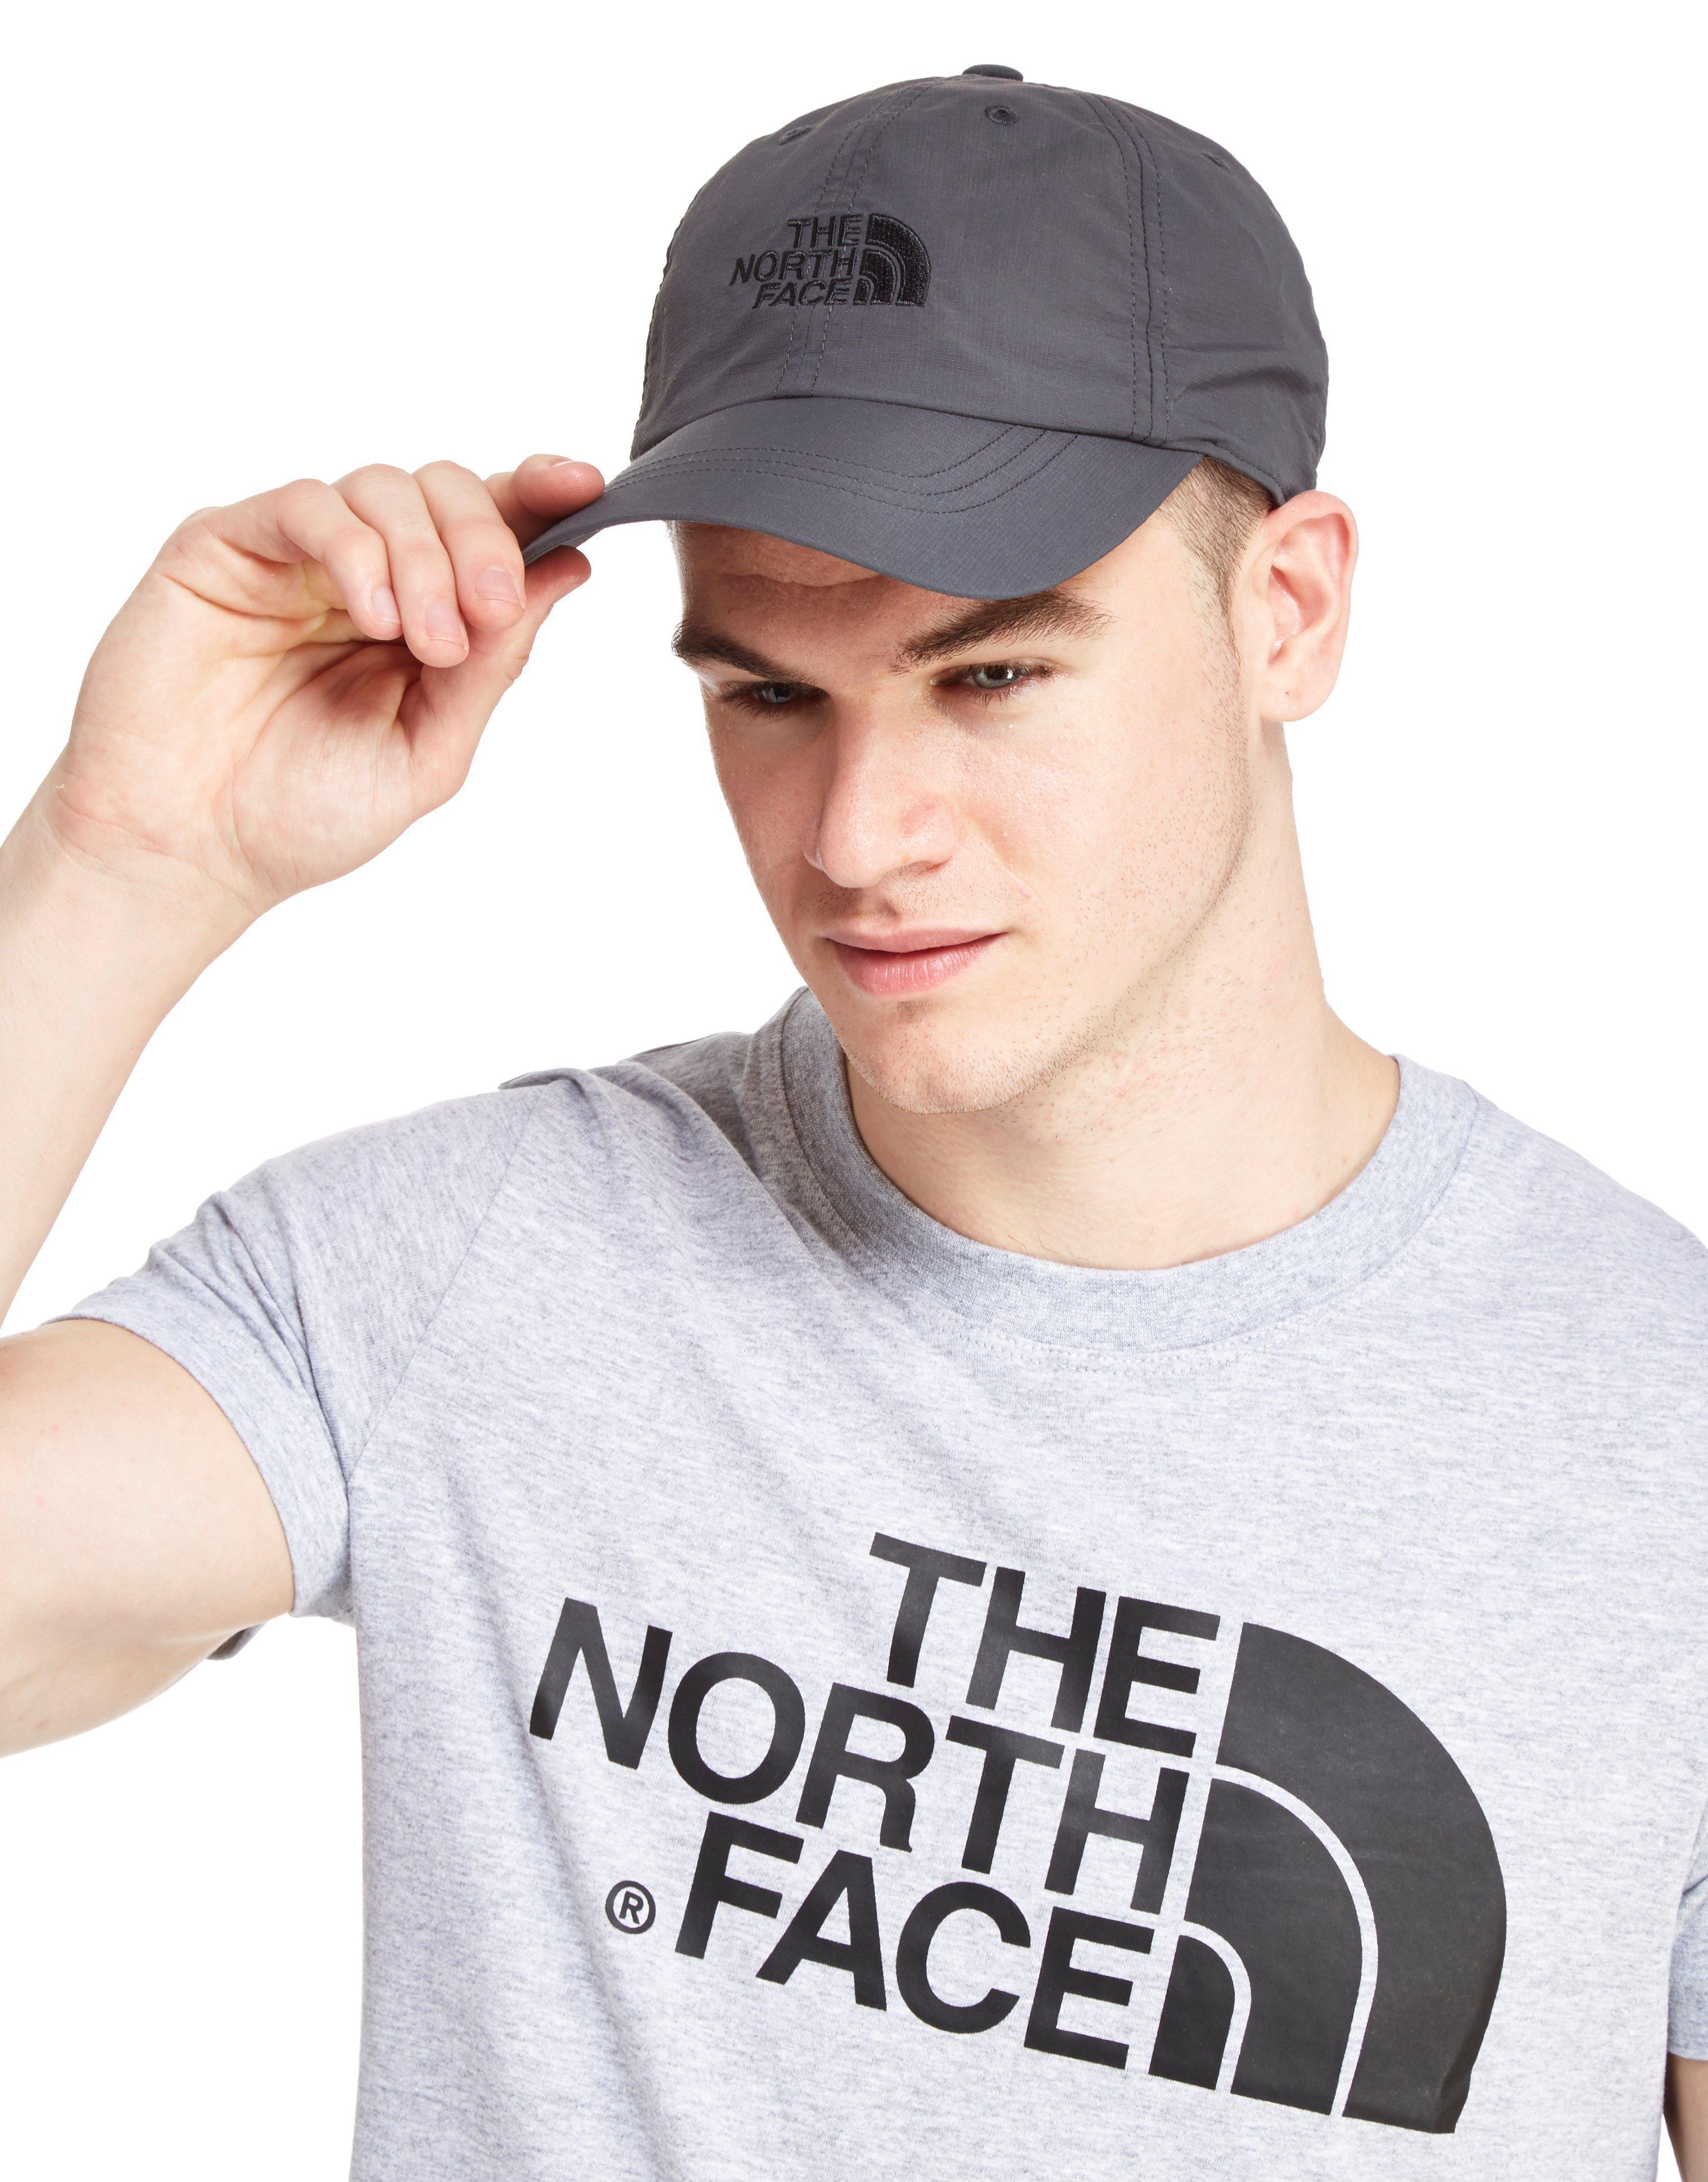 north face grey hat